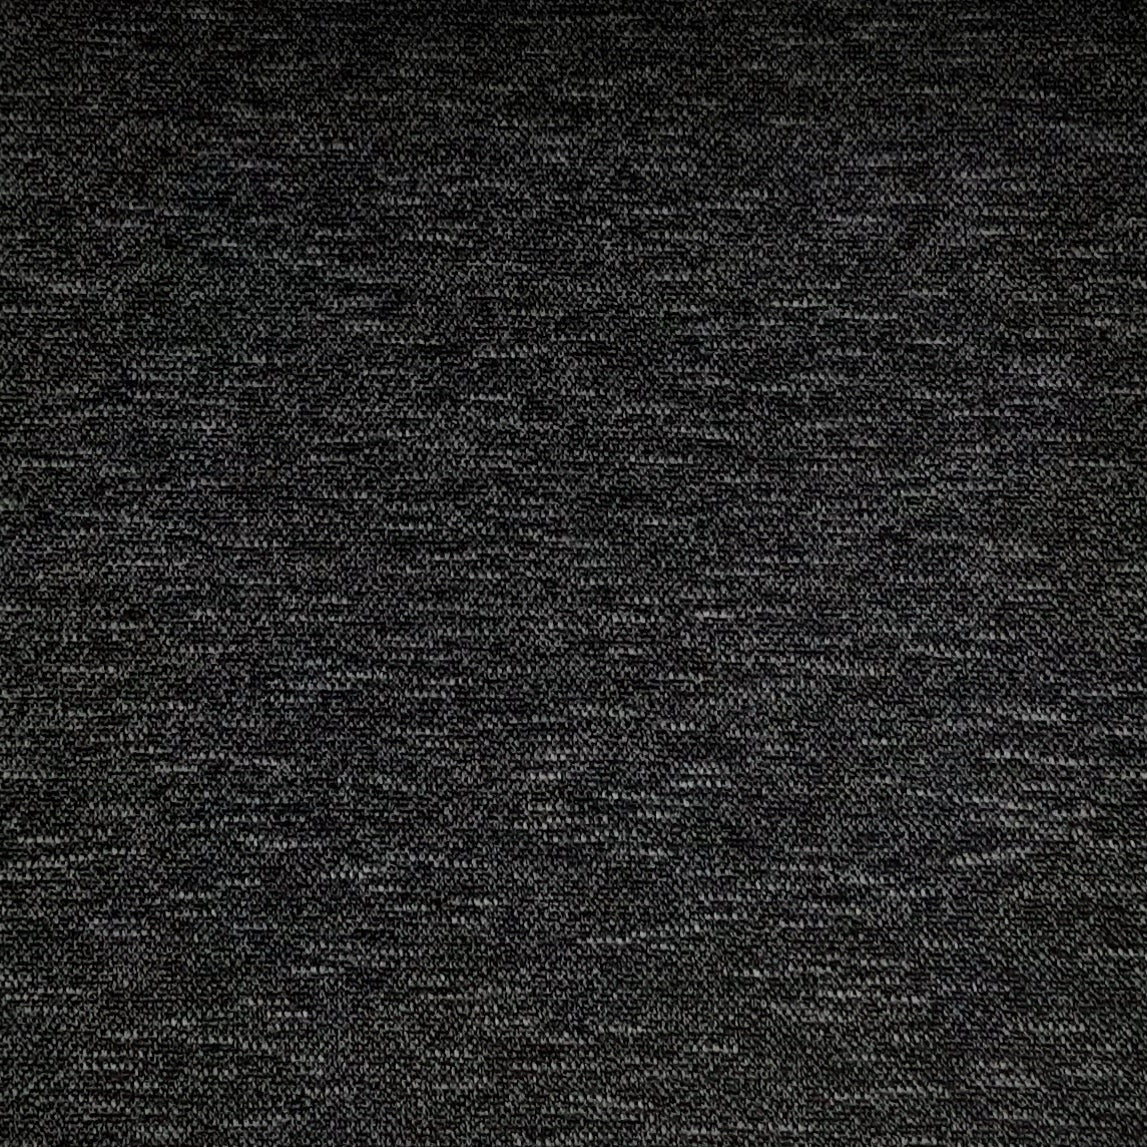 Jet Black Sweater Knit RZ Solid